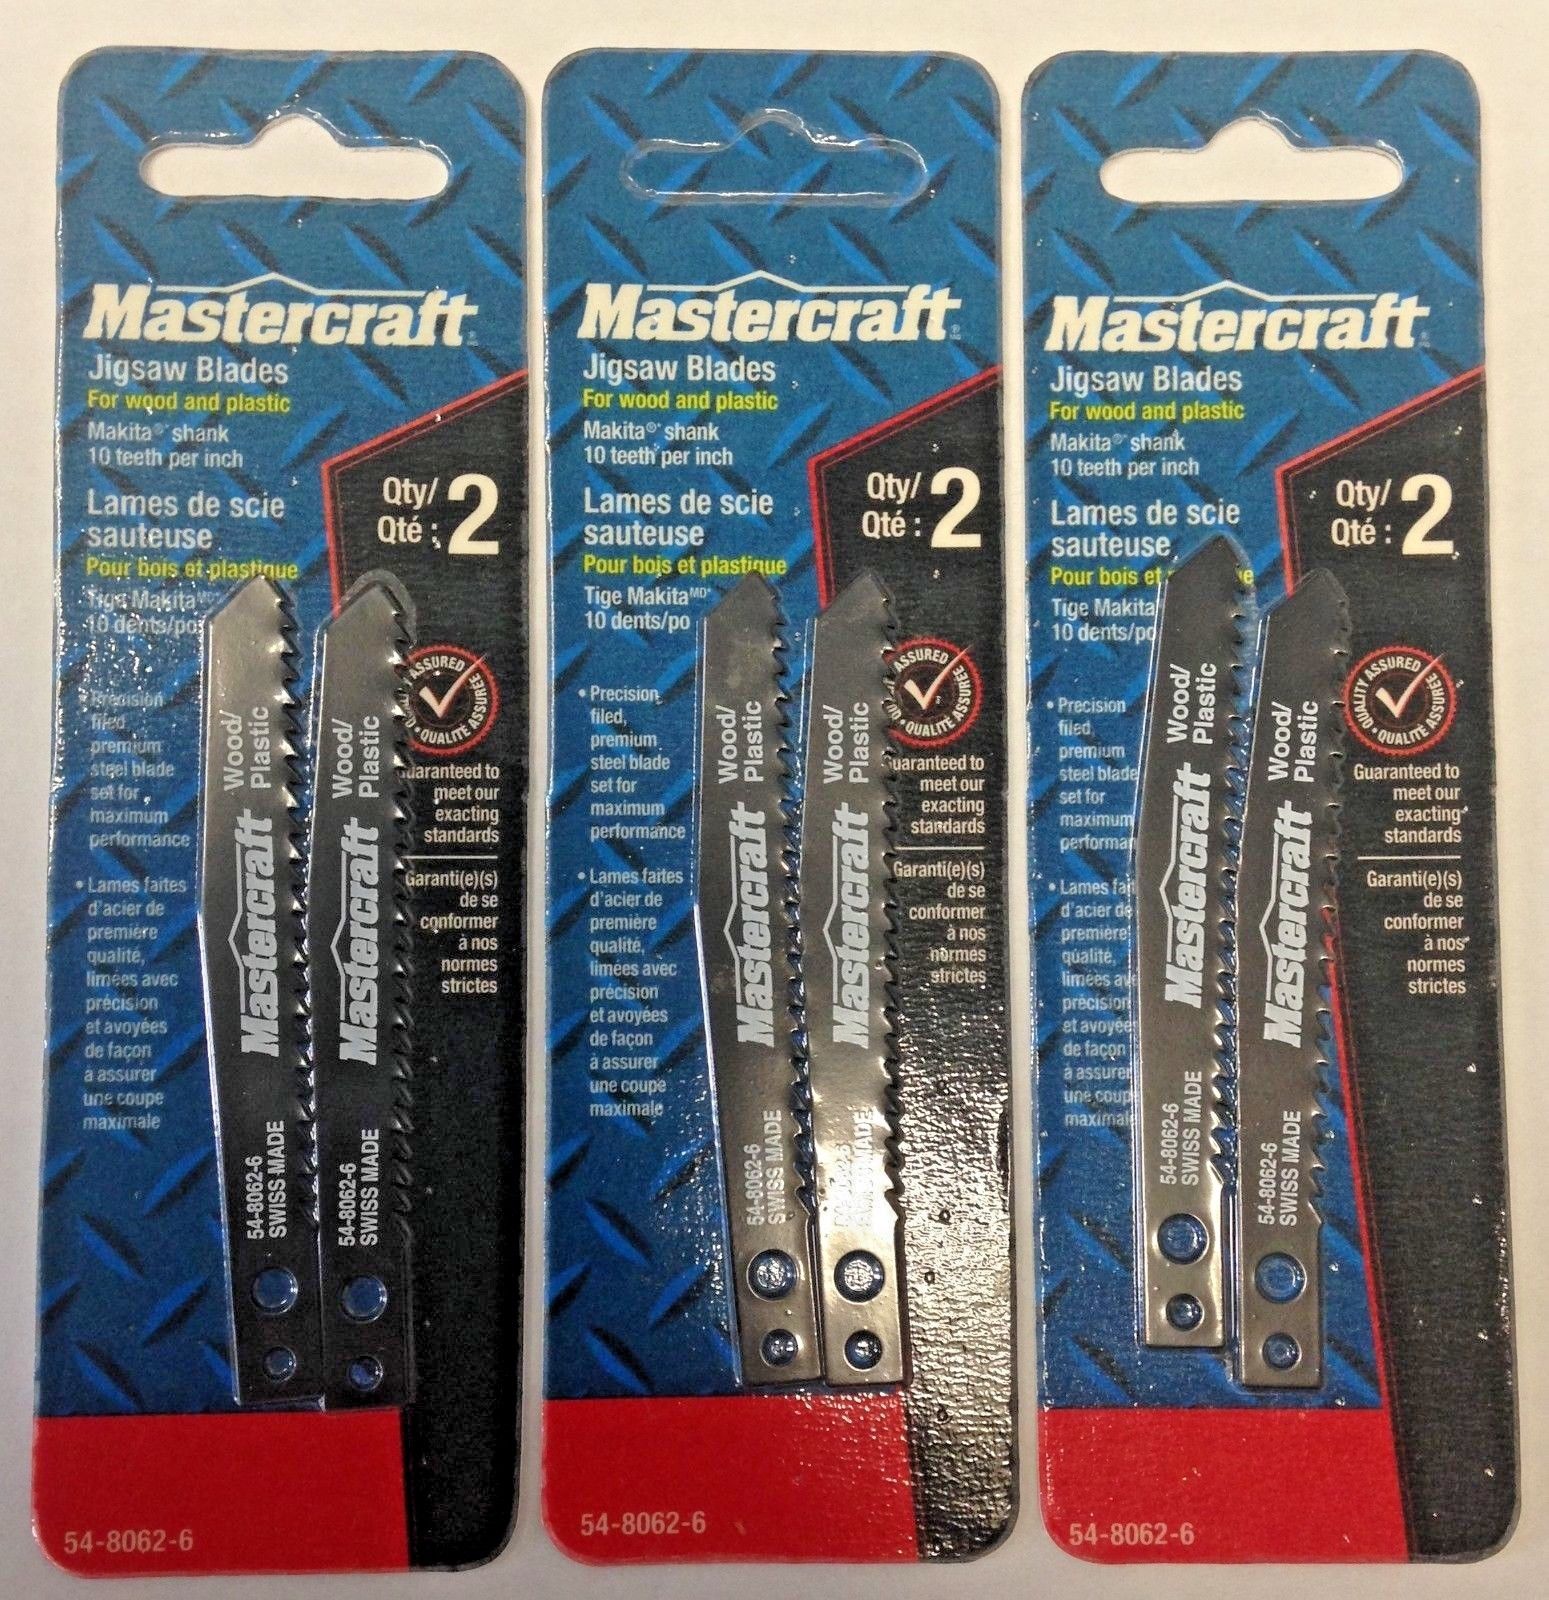 Mastercraft 54-8062-6 4" x 10 TPI Jigsaw Blades For Wood & Plastic 3 Packs of 2